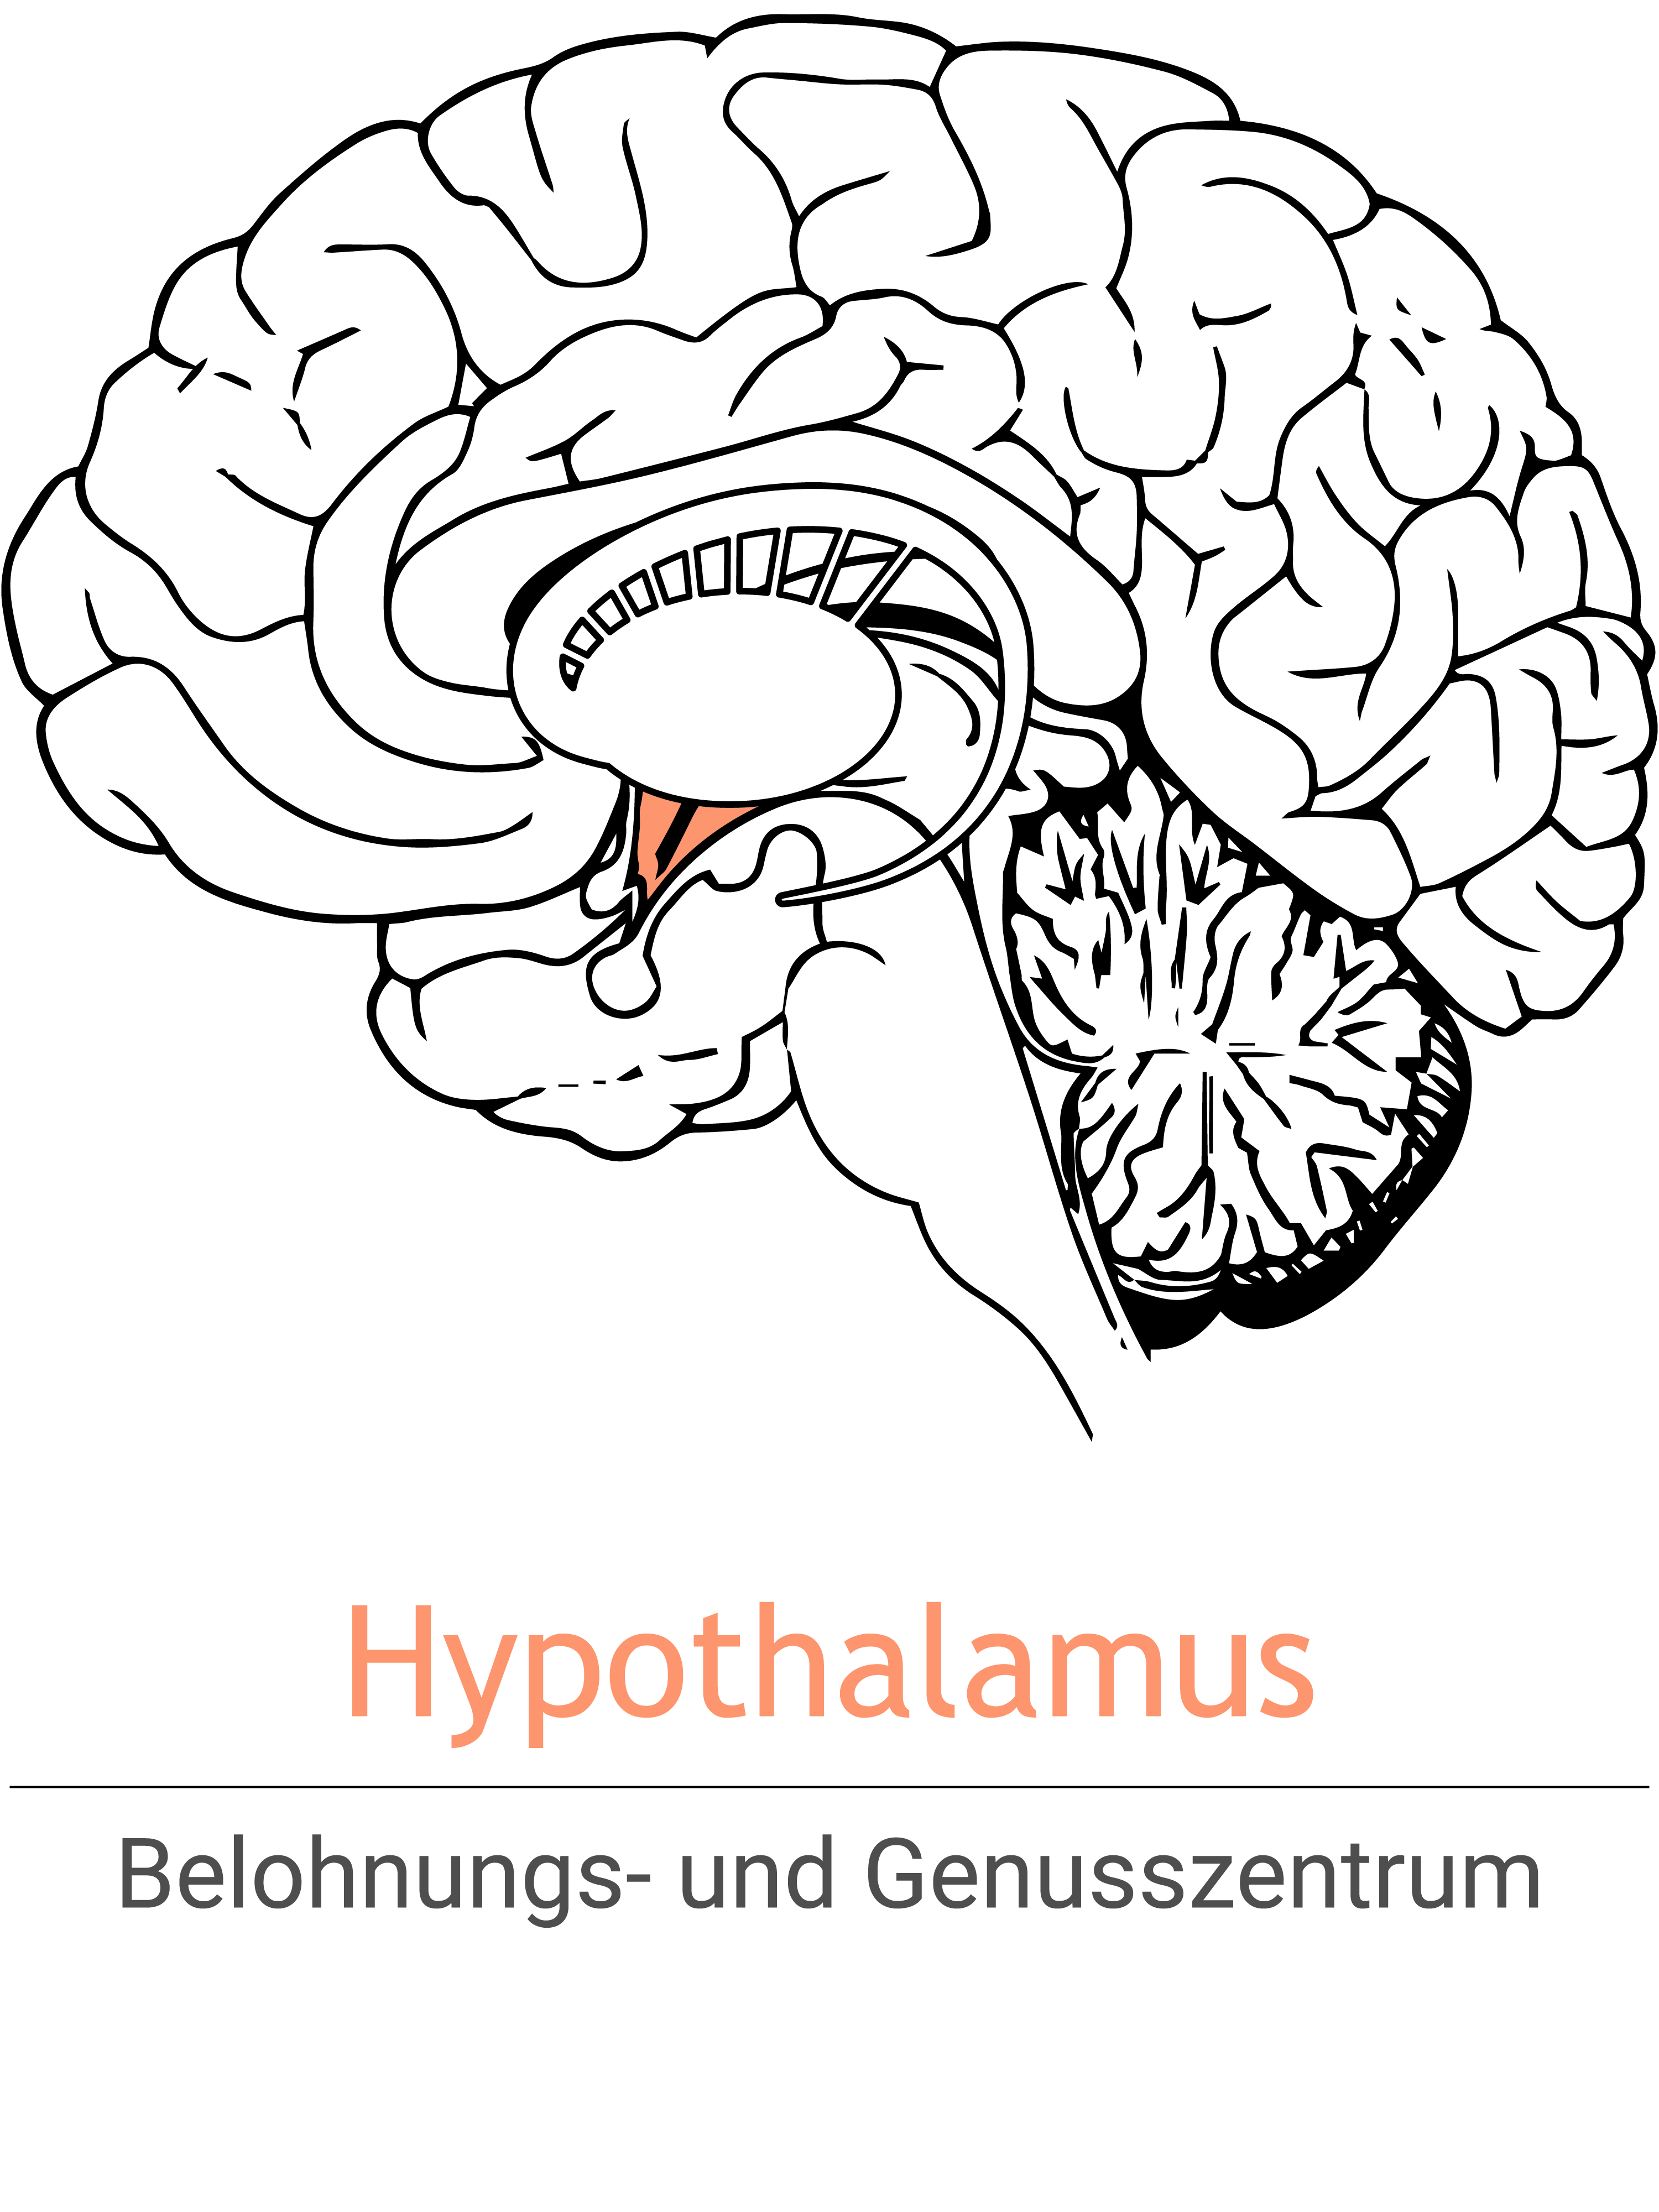 MSH_Hypothalamus_DE